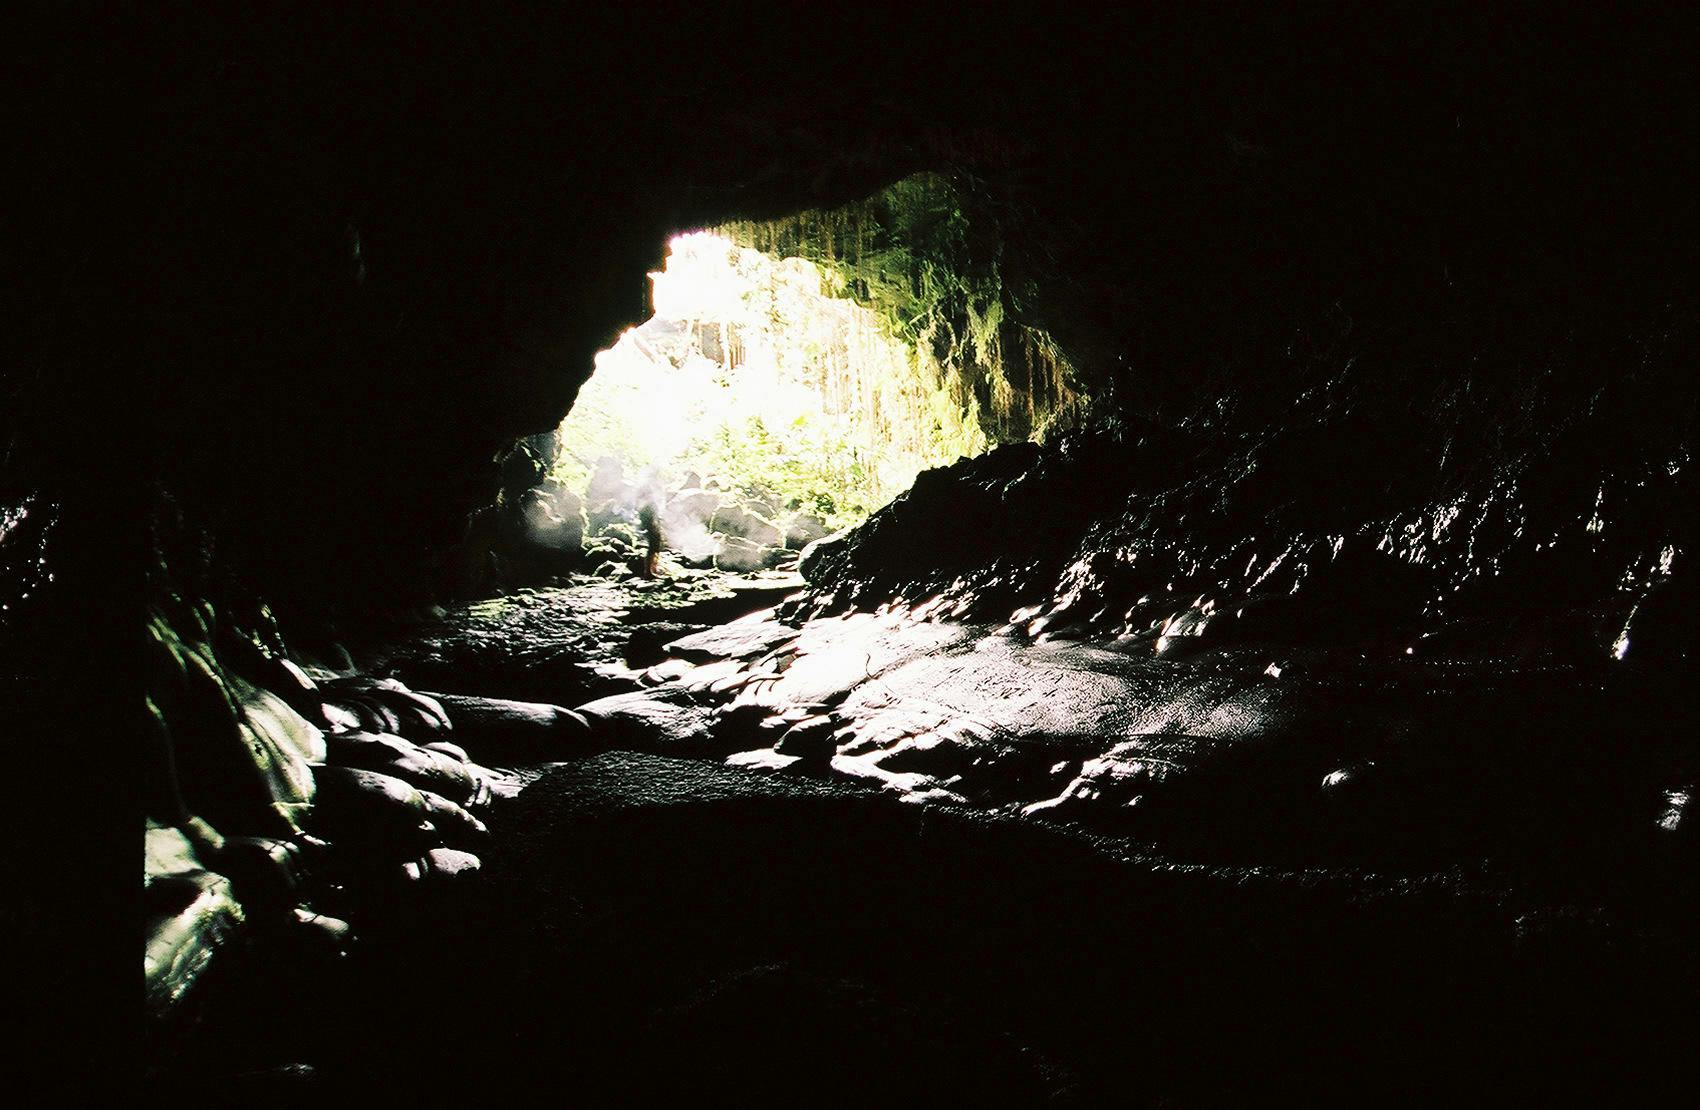 Cave2.jpg